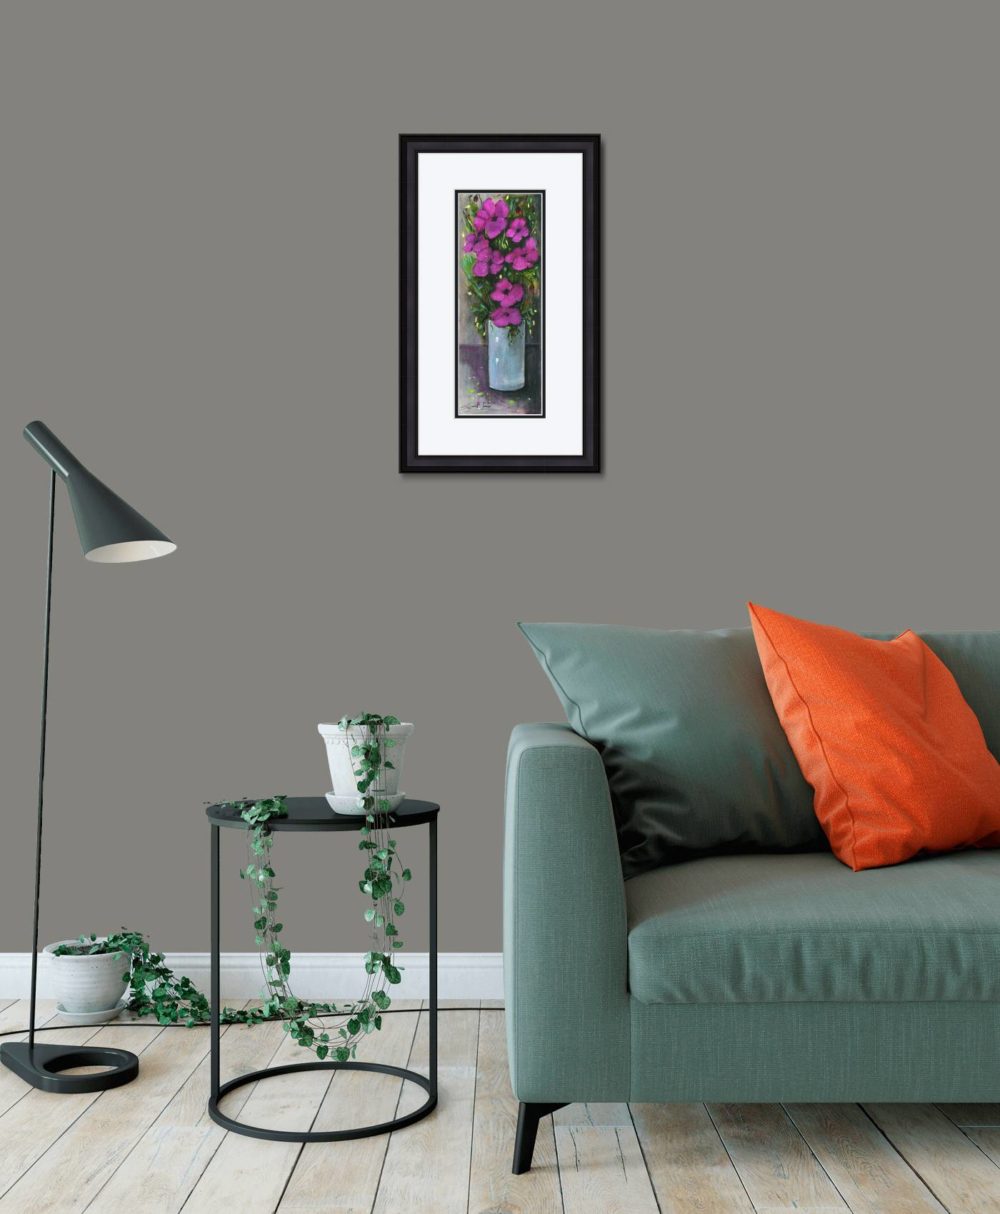 Purple Flowers Print (Small) in Black Frame in Room